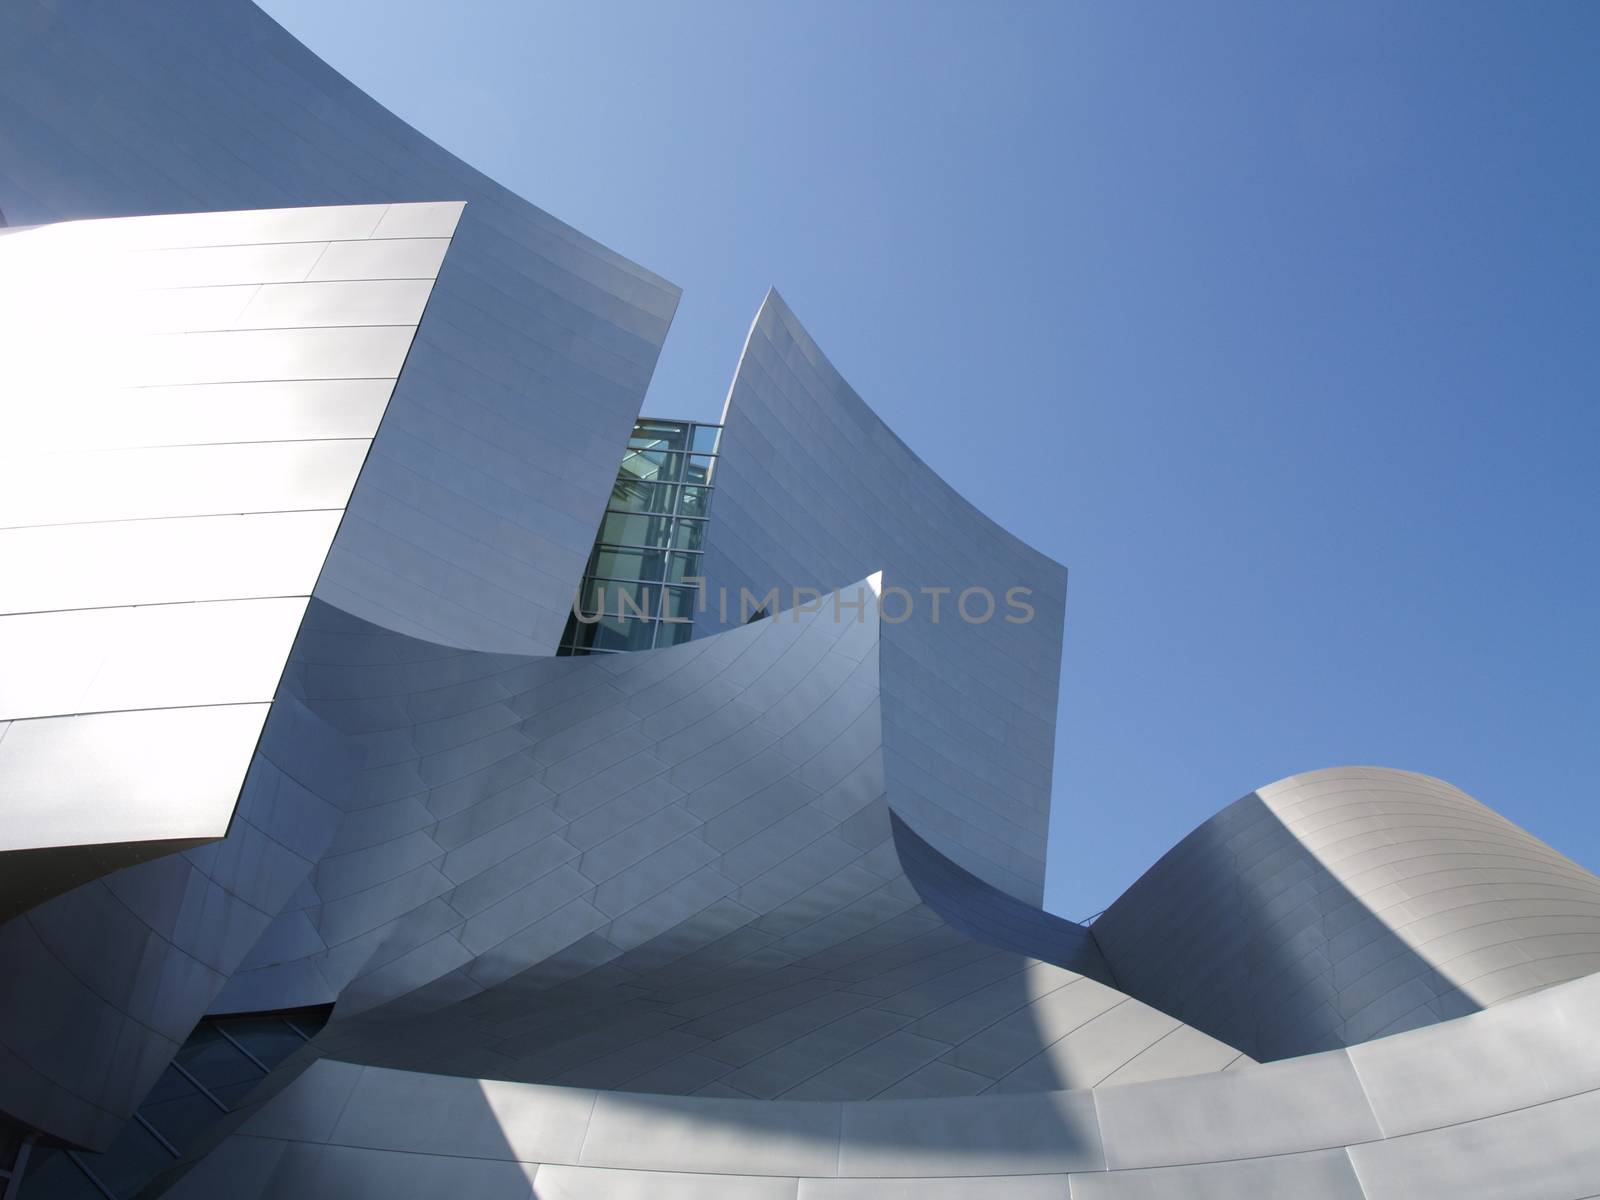 LOS ANGELES - SEPTEMBER 12: Walt Disney Concert Hall in Los Ange by anderm